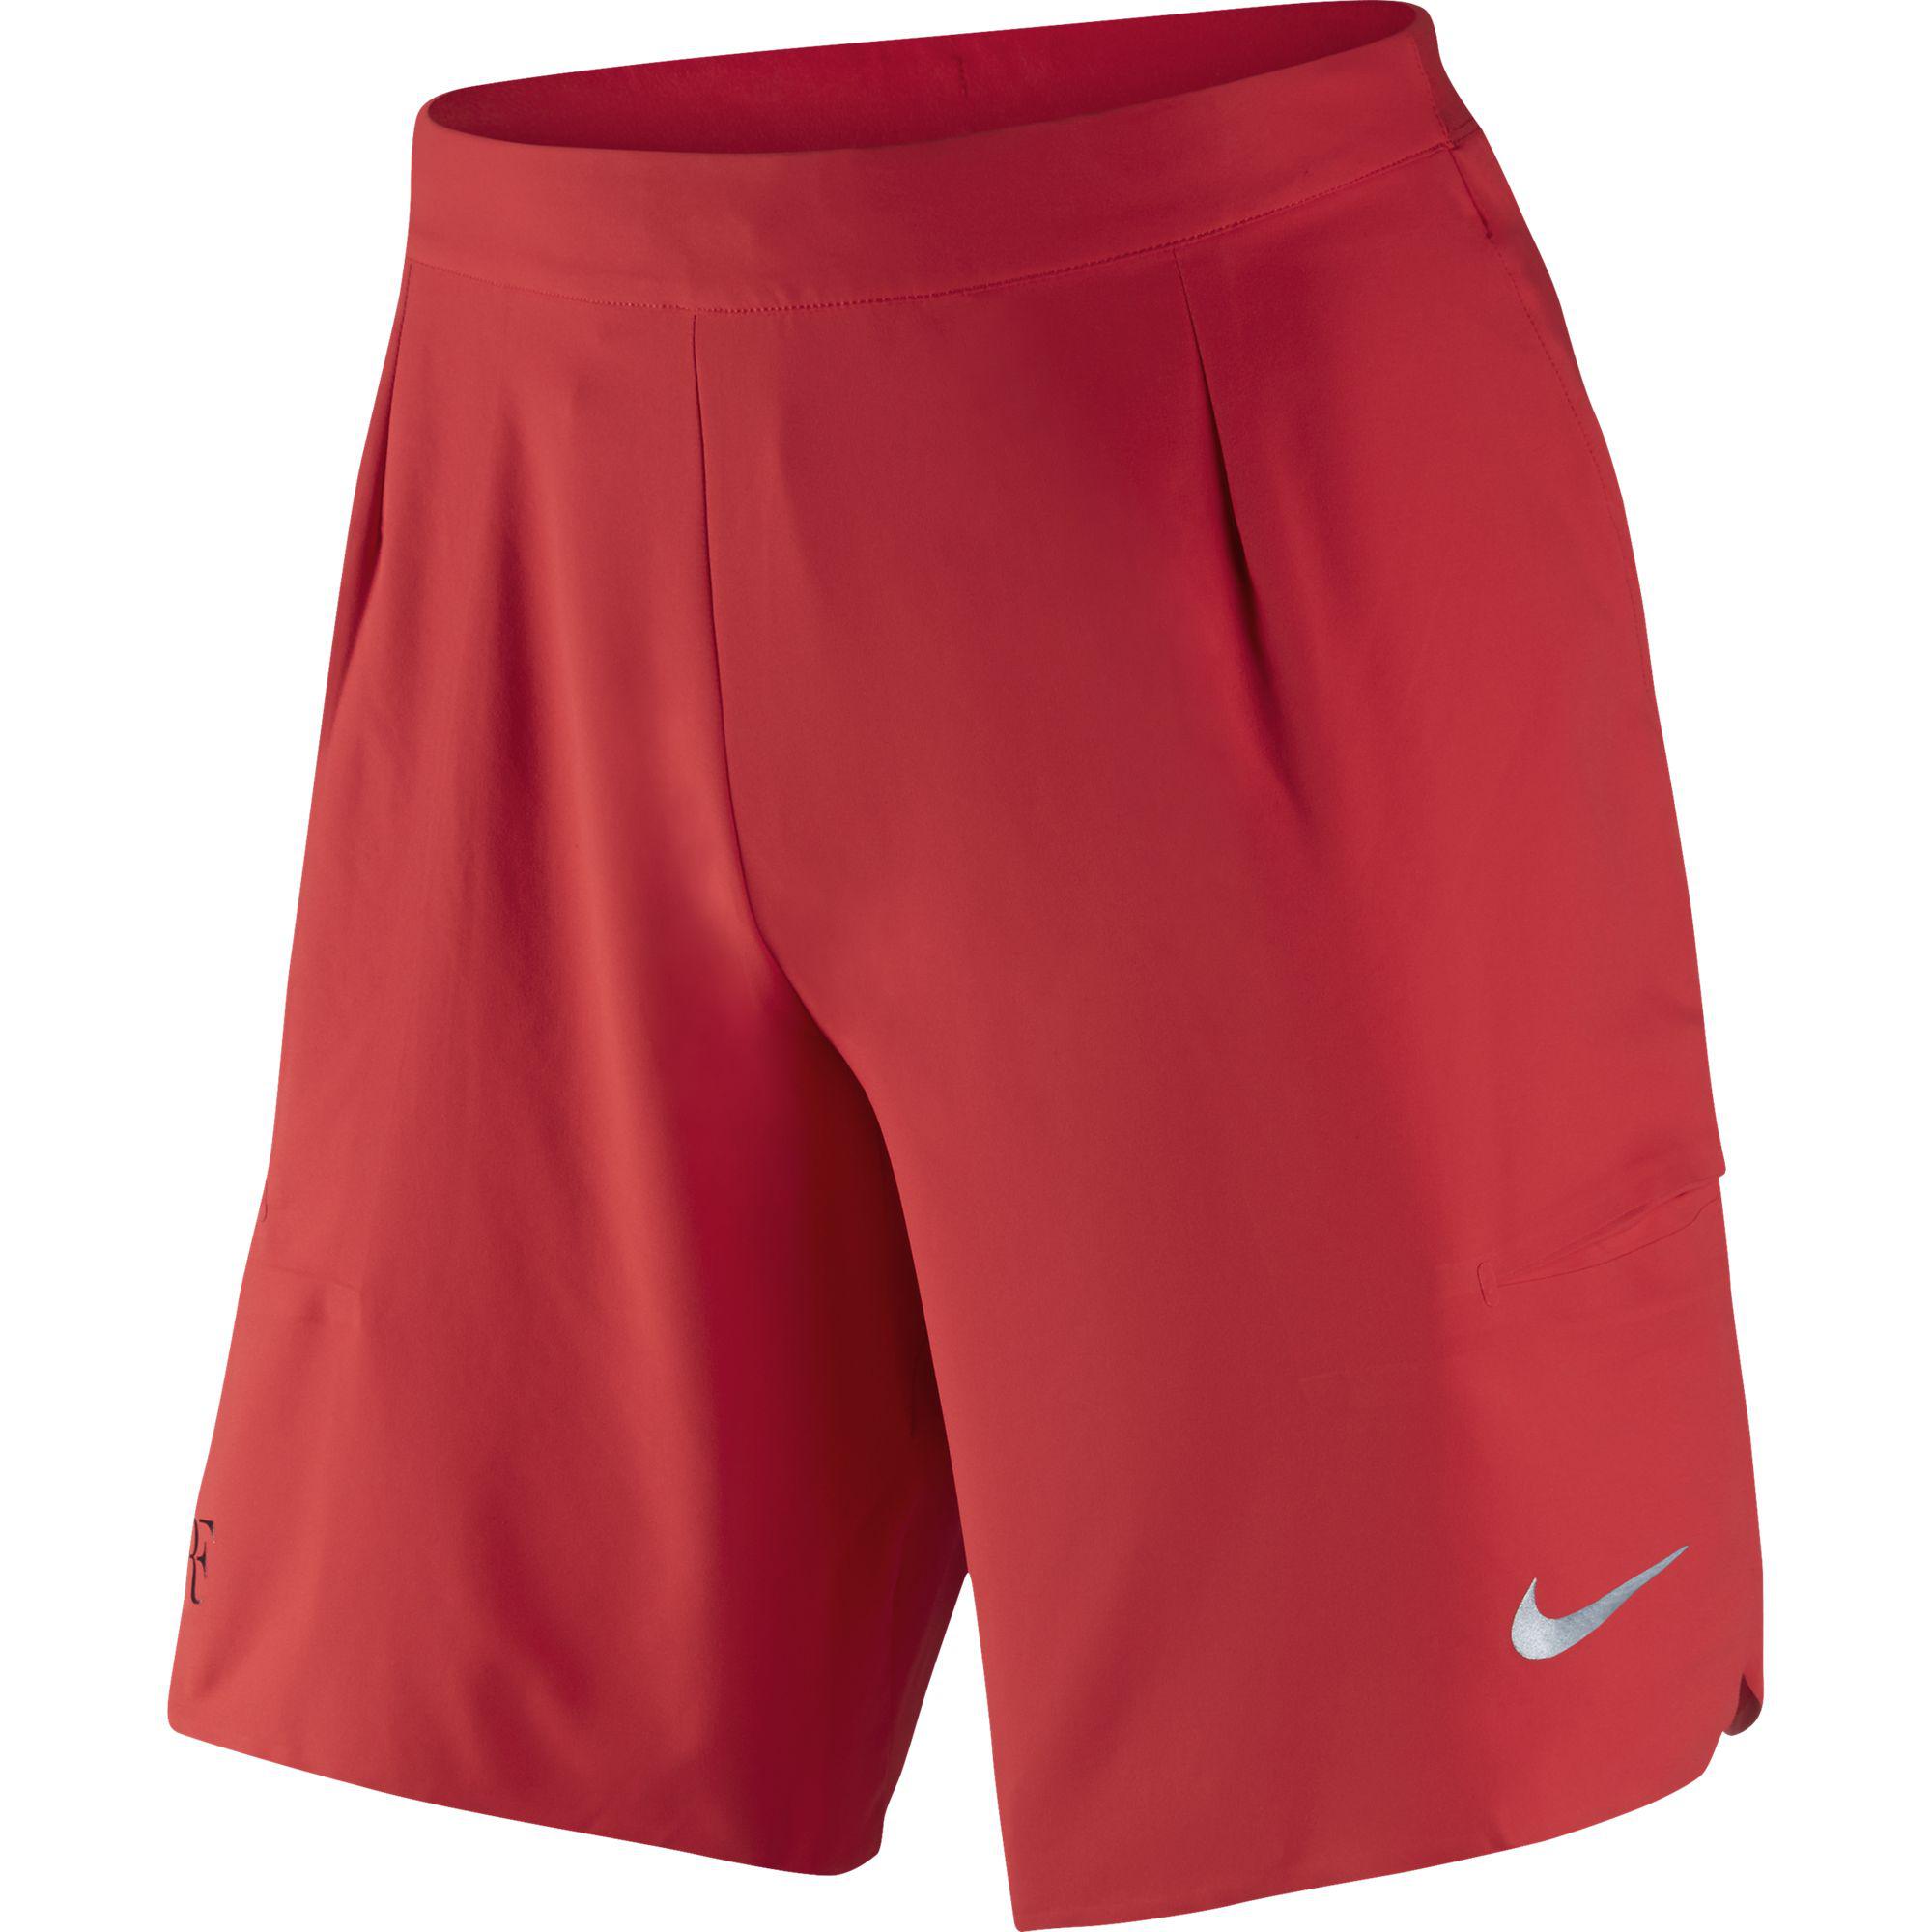 Retouch discount a creditor Nike Mens Court Flex RF 9 Inch Tennis Shorts - Action Red - Tennisnuts.com